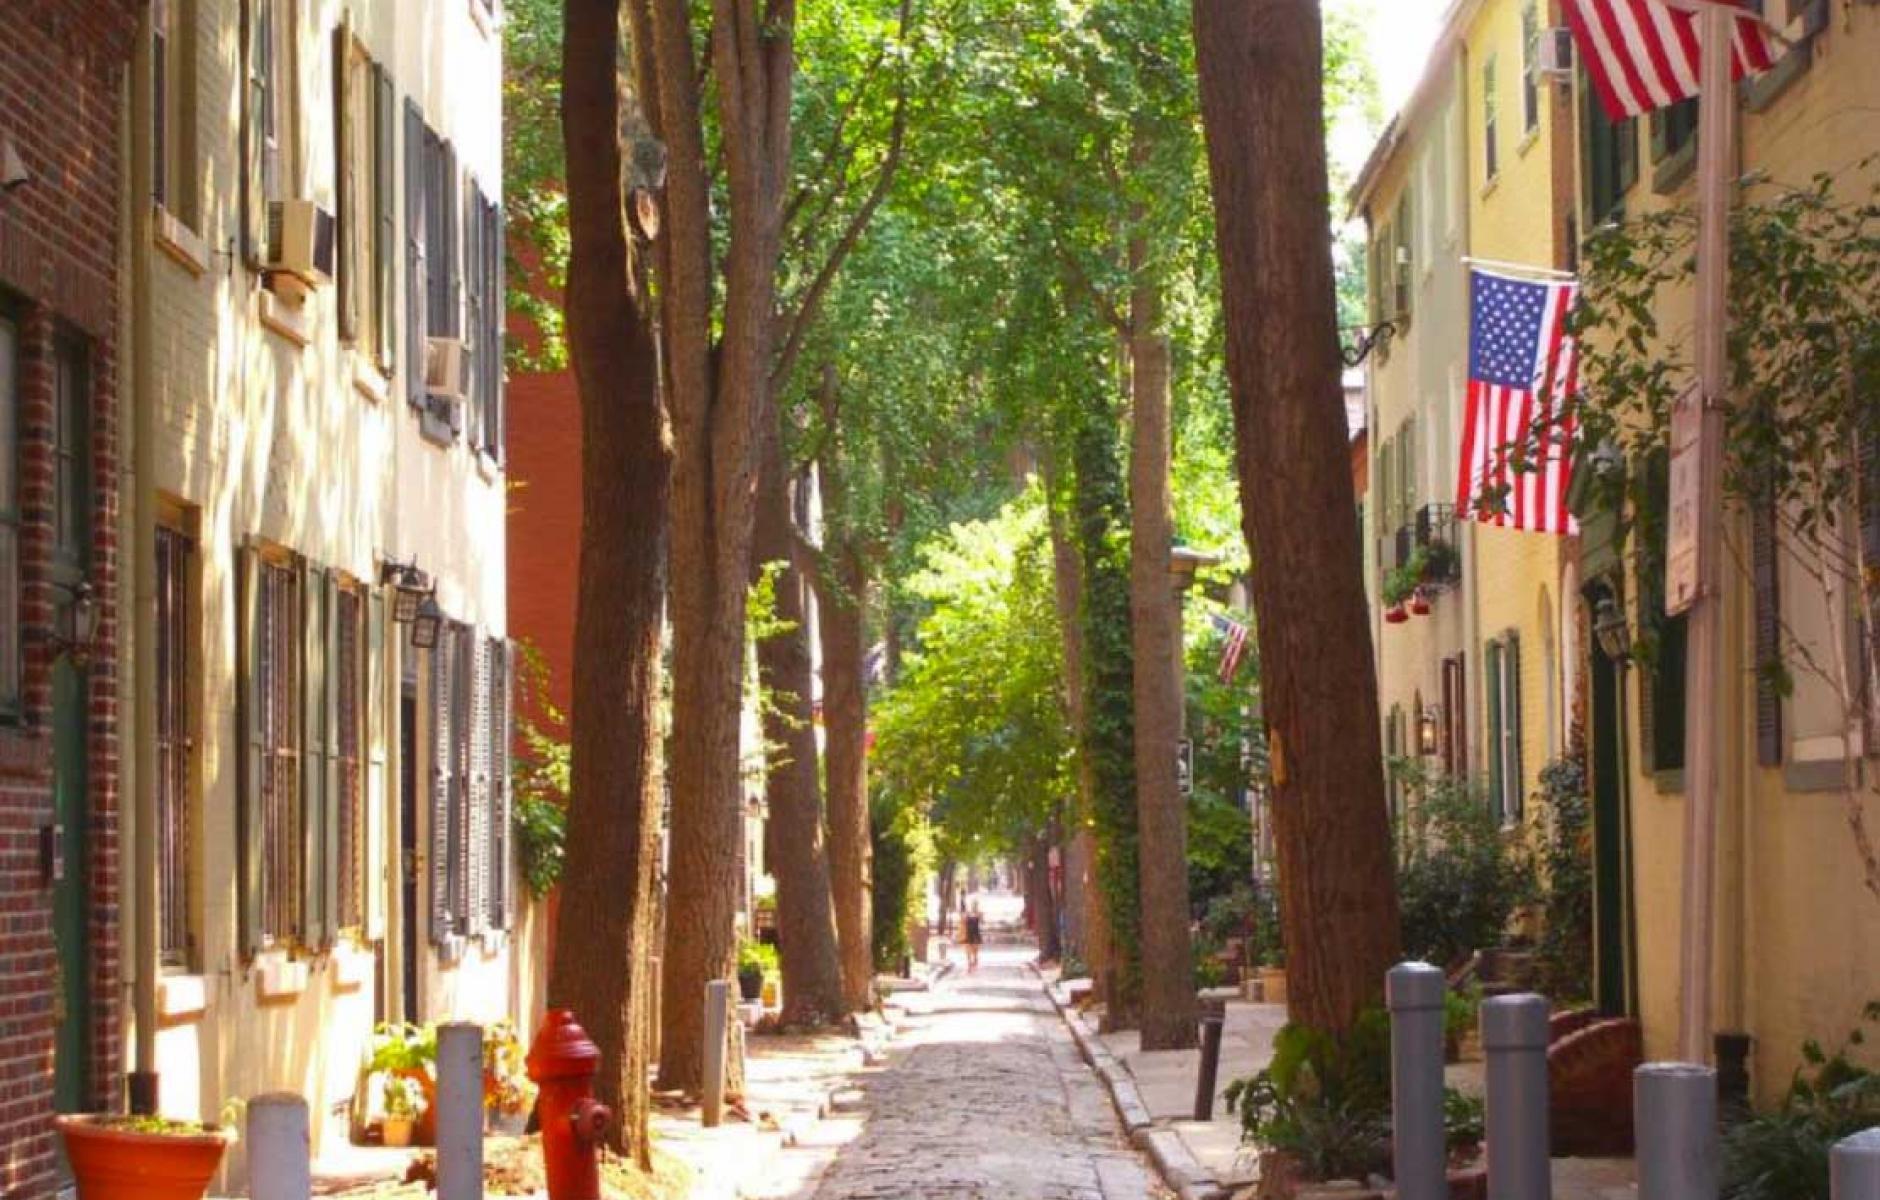 A minor street in Philadelphia. Source: The American Alley.